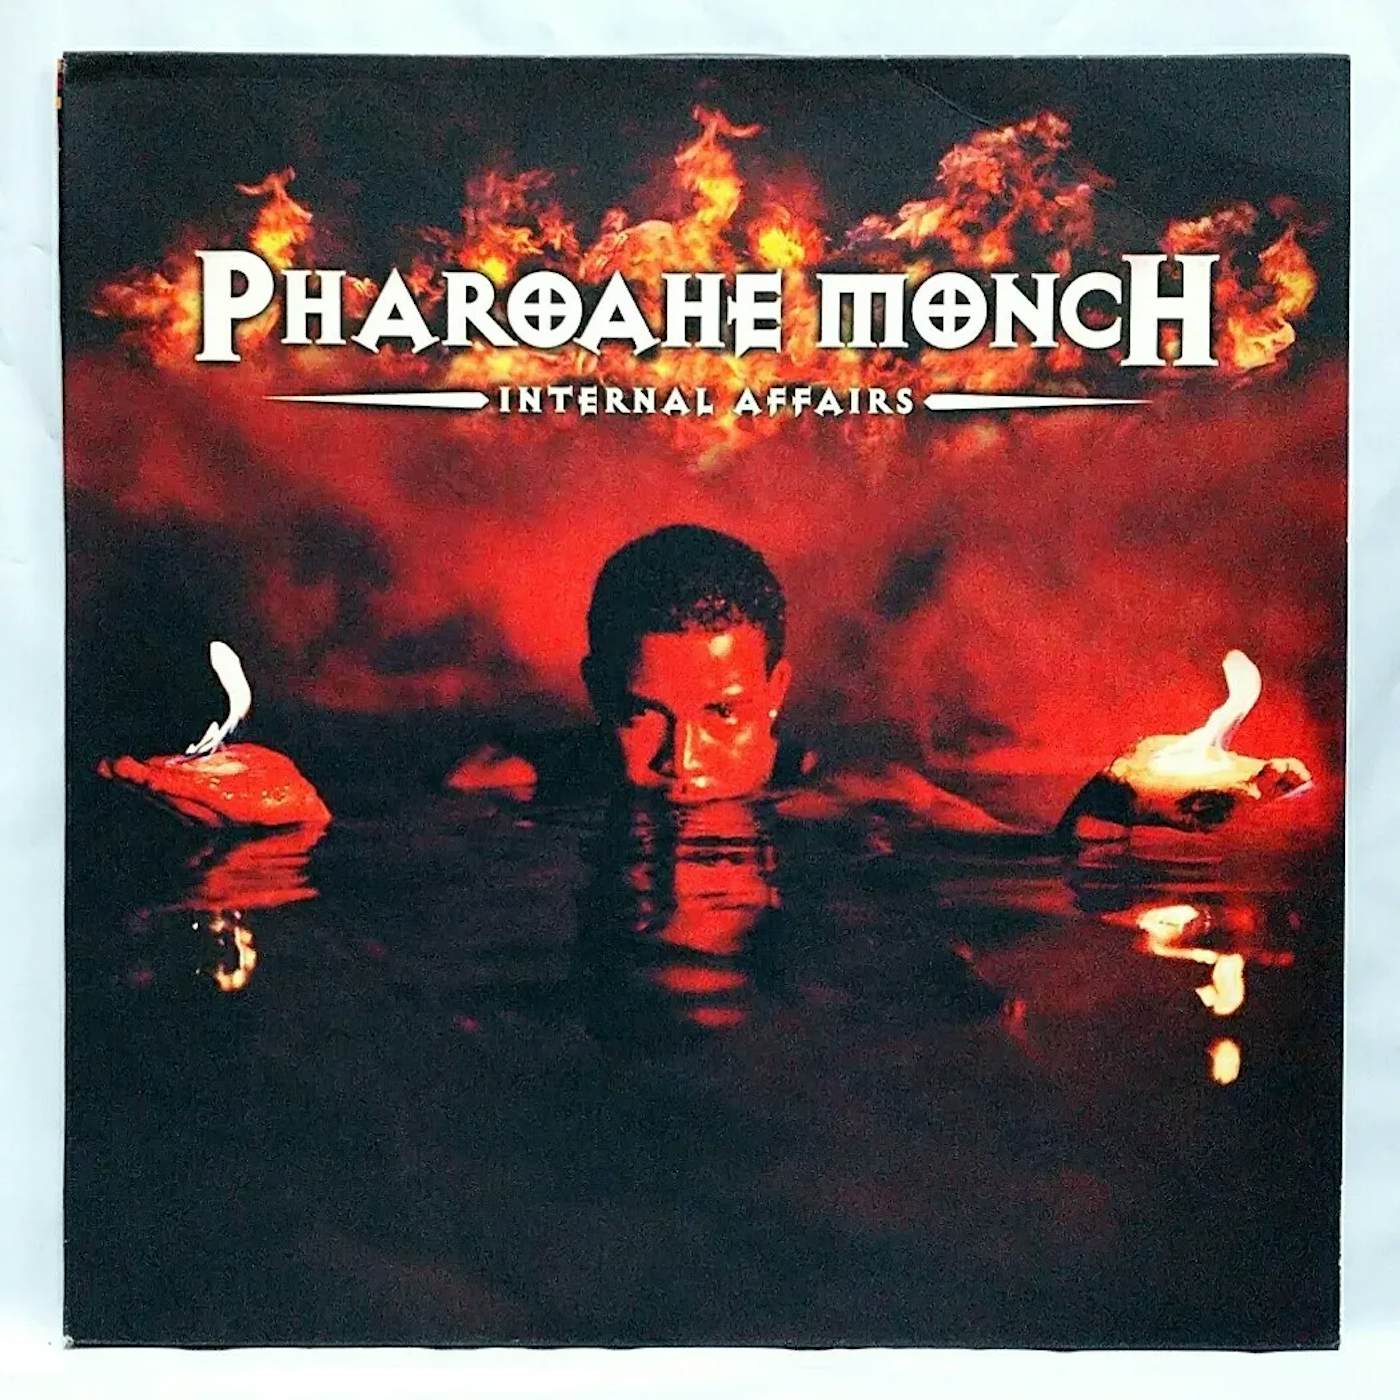 Pharoahe Monch INTERNAL AFFAIRS Vinyl Record